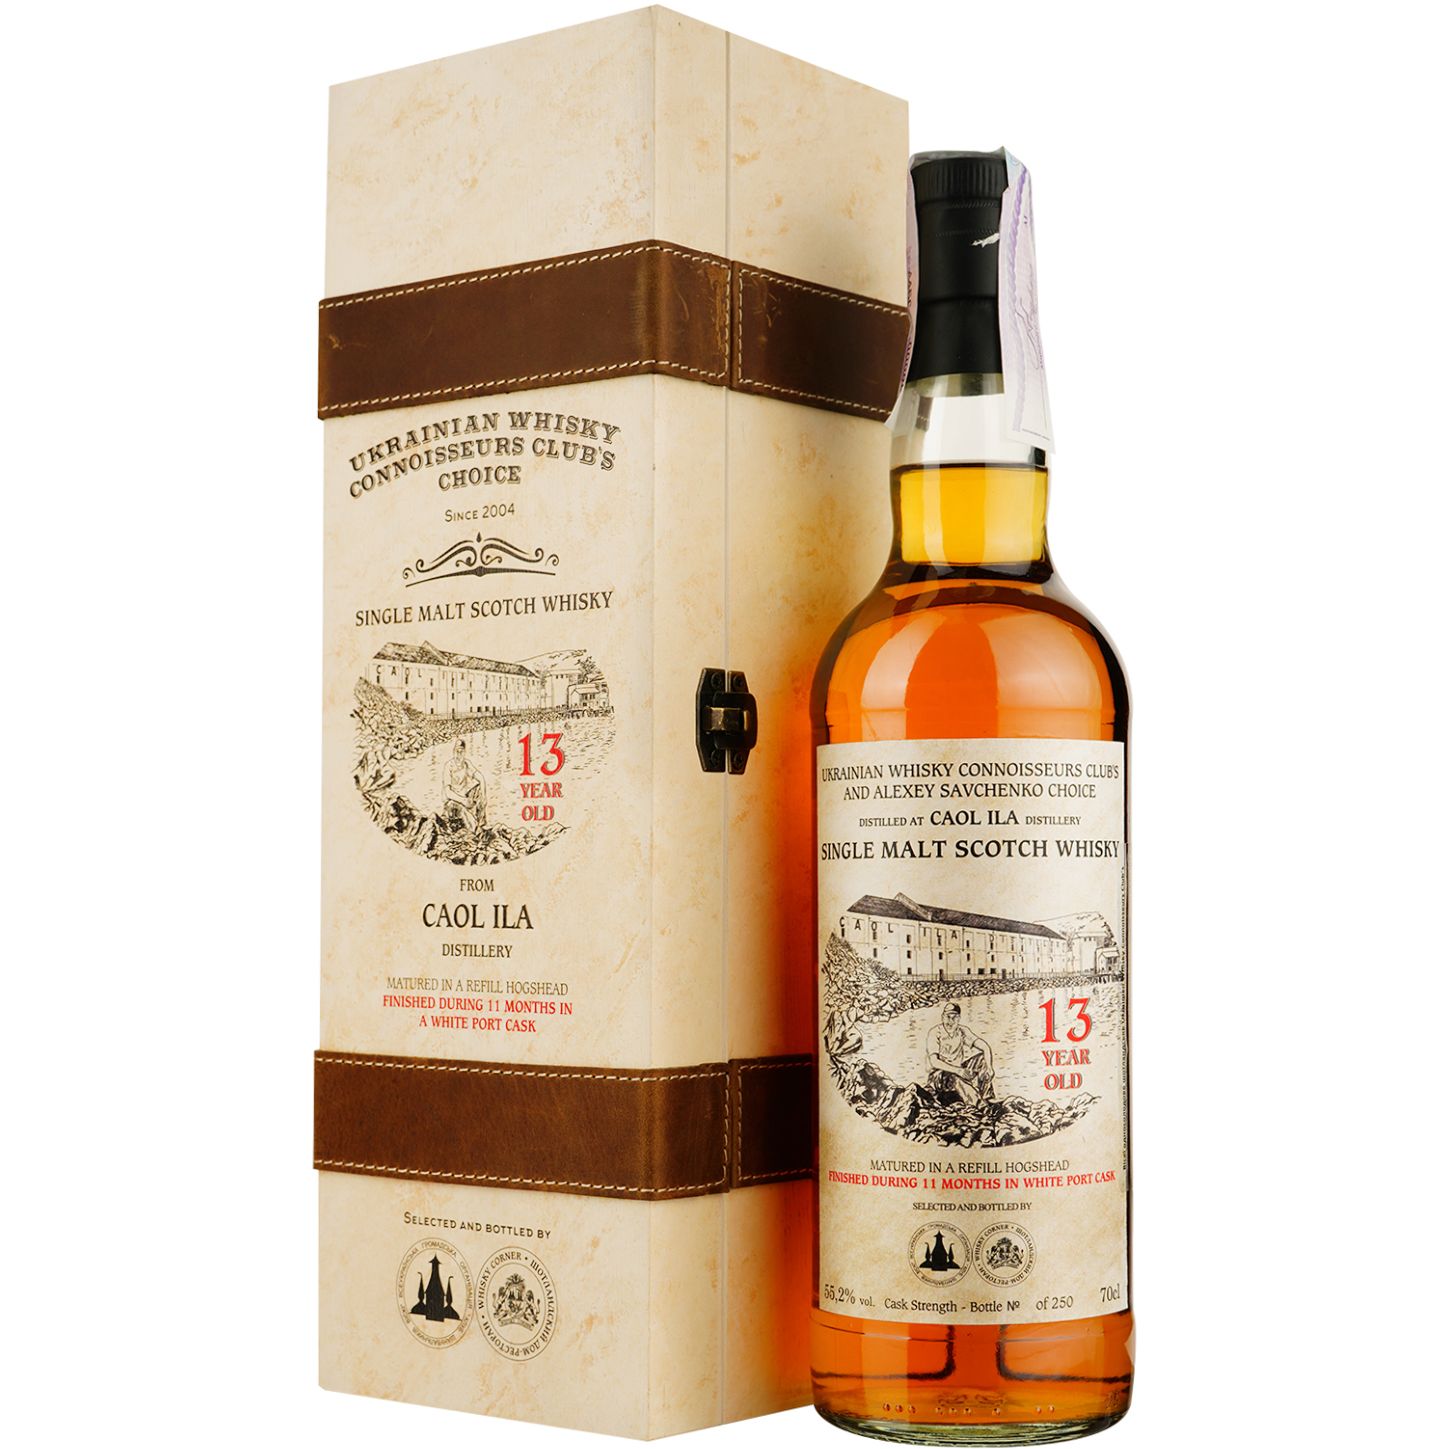 Виски Caol Ila 13 Years Old White Porto Single Malt Scotch Whisky, в подарочной упаковке, 55,2%, 0,7 л - фото 1